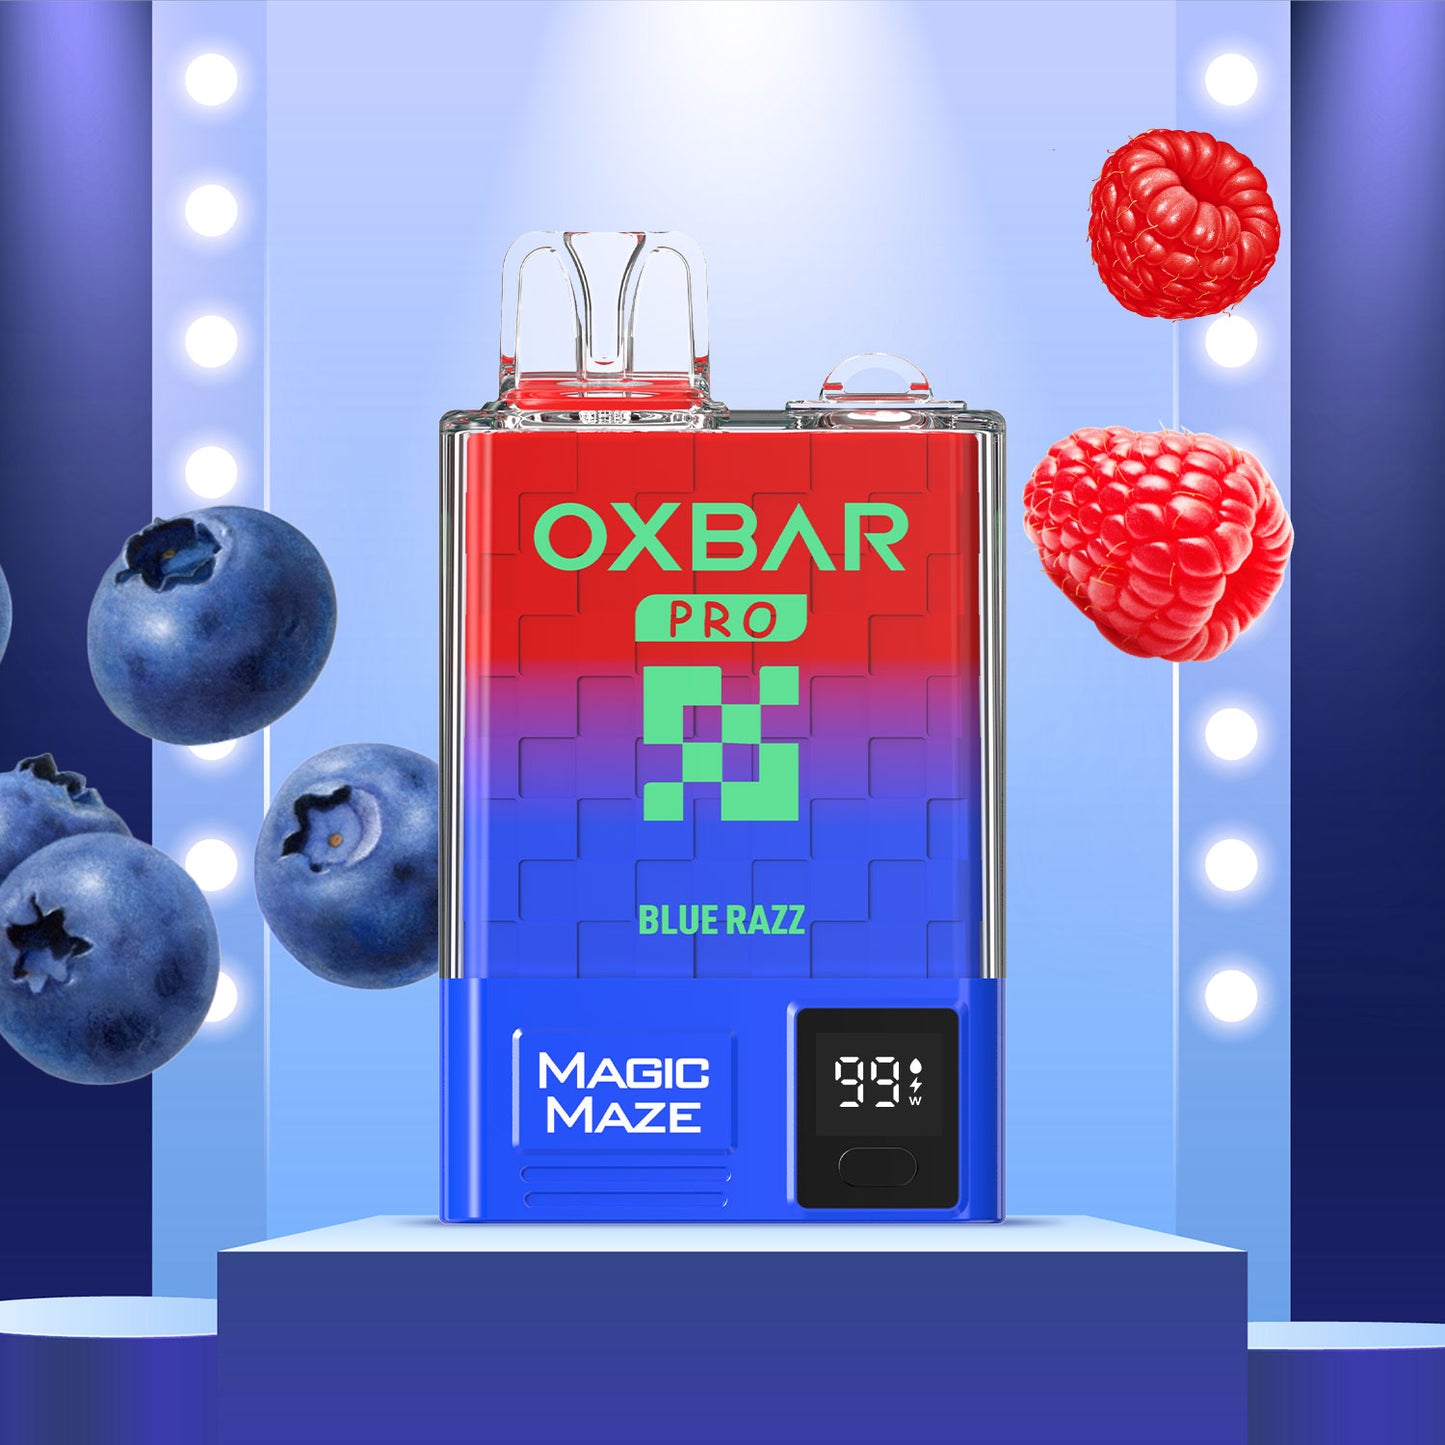 Oxbar Magic Maze Pro 10000 Puff Disposable Vape Device